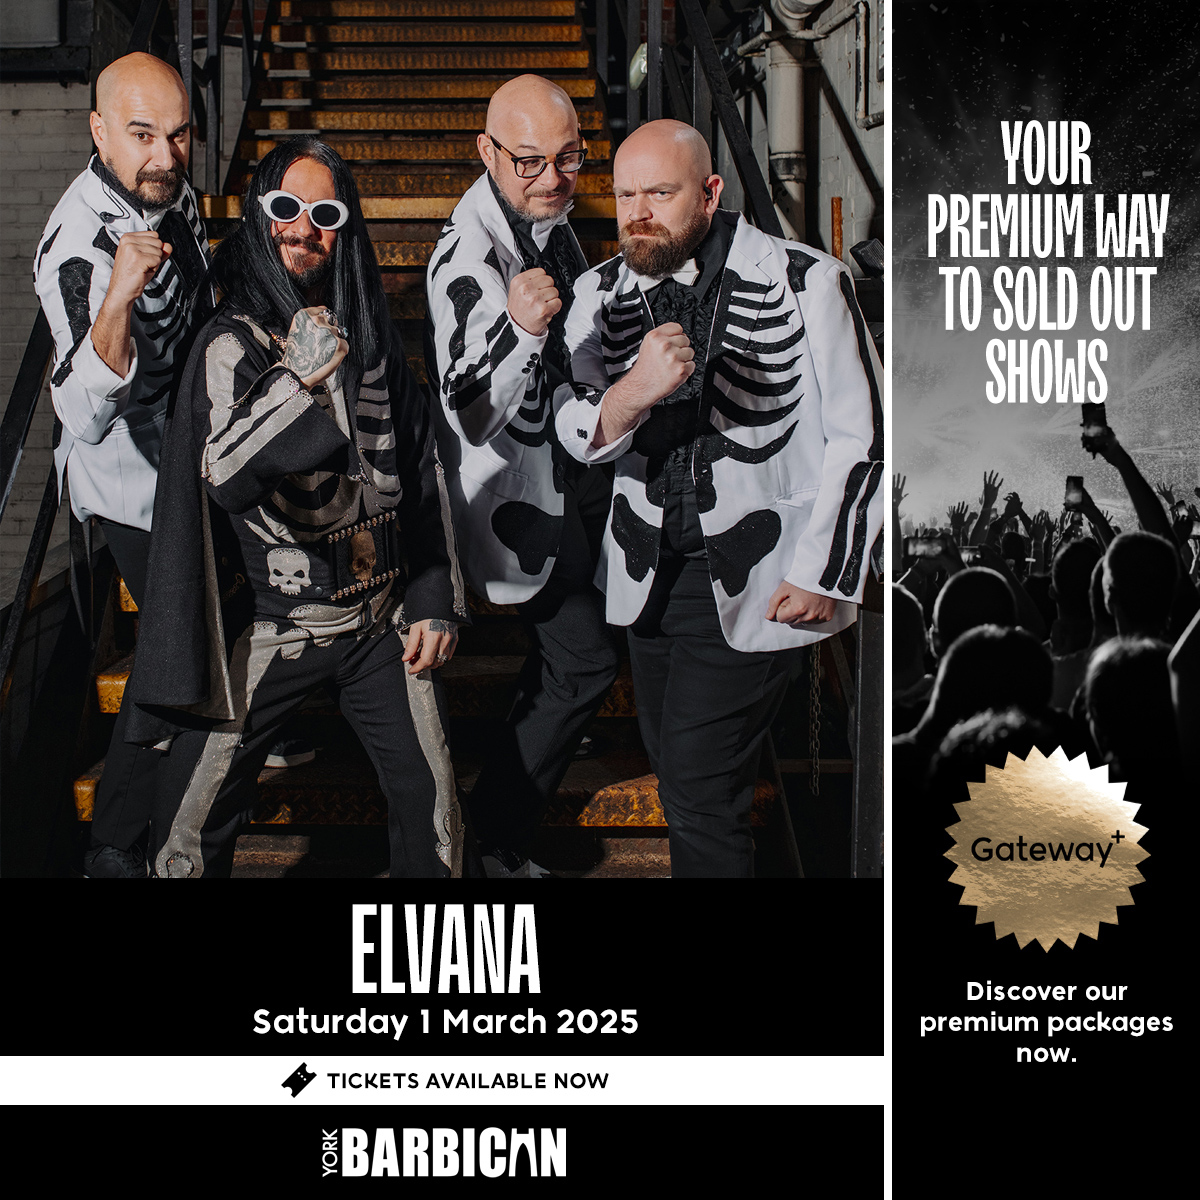 🎸🕺 Elvis + Nirvana = #Elvana! @elvana_elvis1 return to @yorkbarbican! 🎟️ Grab your tickets now: yorkbarbican.co.uk/whats-on/elvan… ➕ Gateway+ Premium Experience: yorkbarbican.seatunique.com/music-tickets/… #York #YorkBarbican @thisisyo1